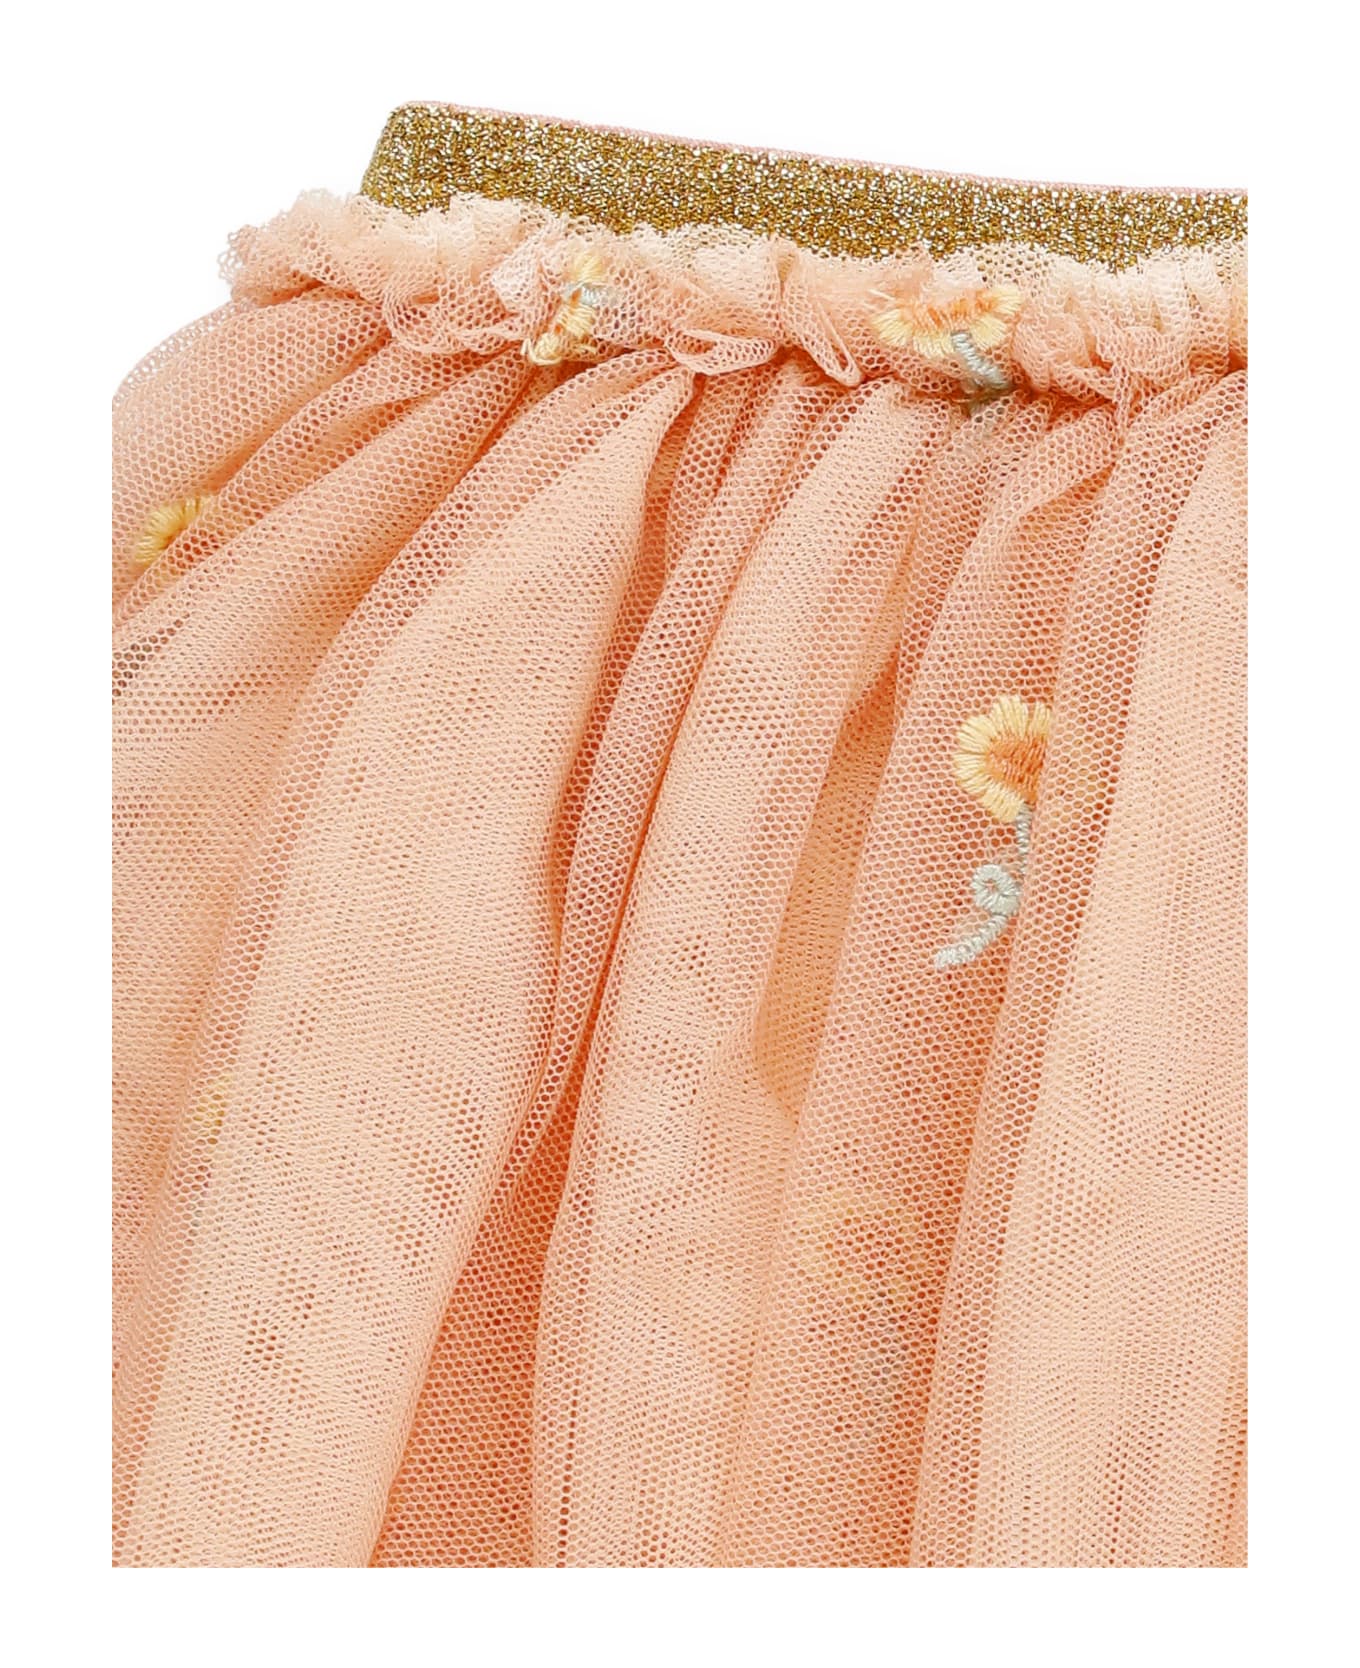 Stella McCartney Sunflower Embroidery Skirt - Pink